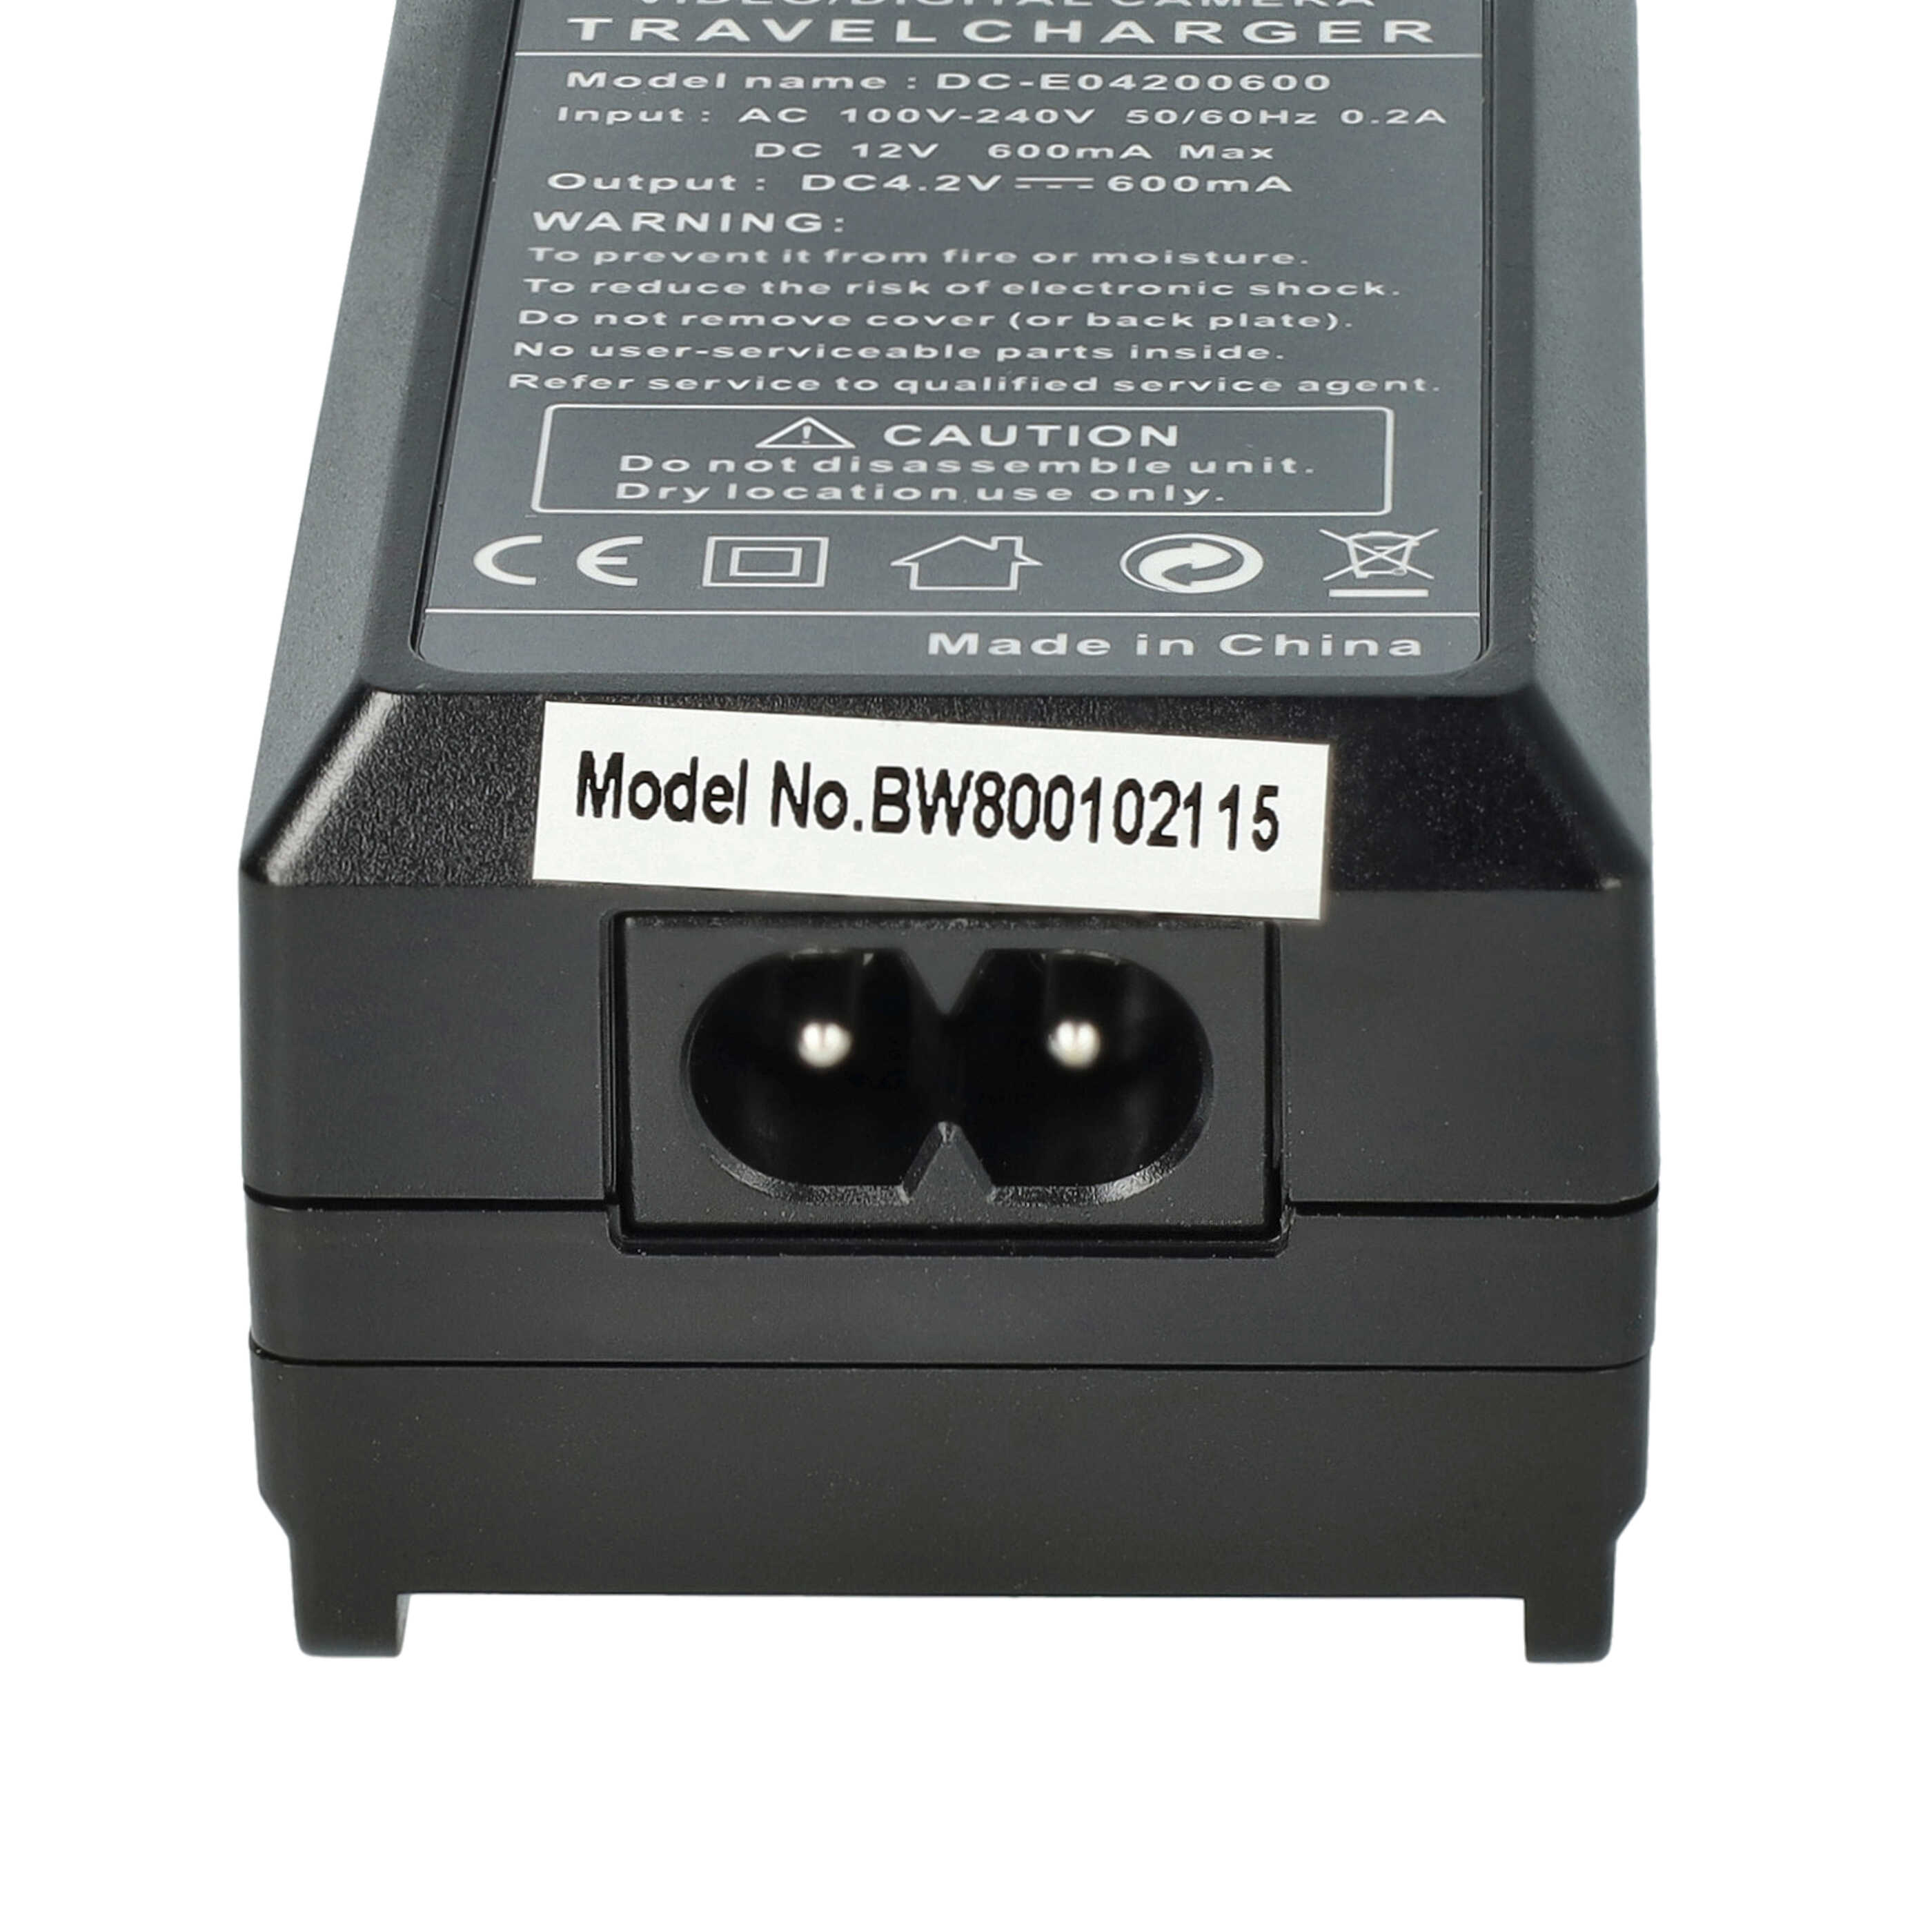 Ładowarka do aparatu Everio GZ-V500 i innych - ładowarka akumulatora 0,6 A, 4,2 V